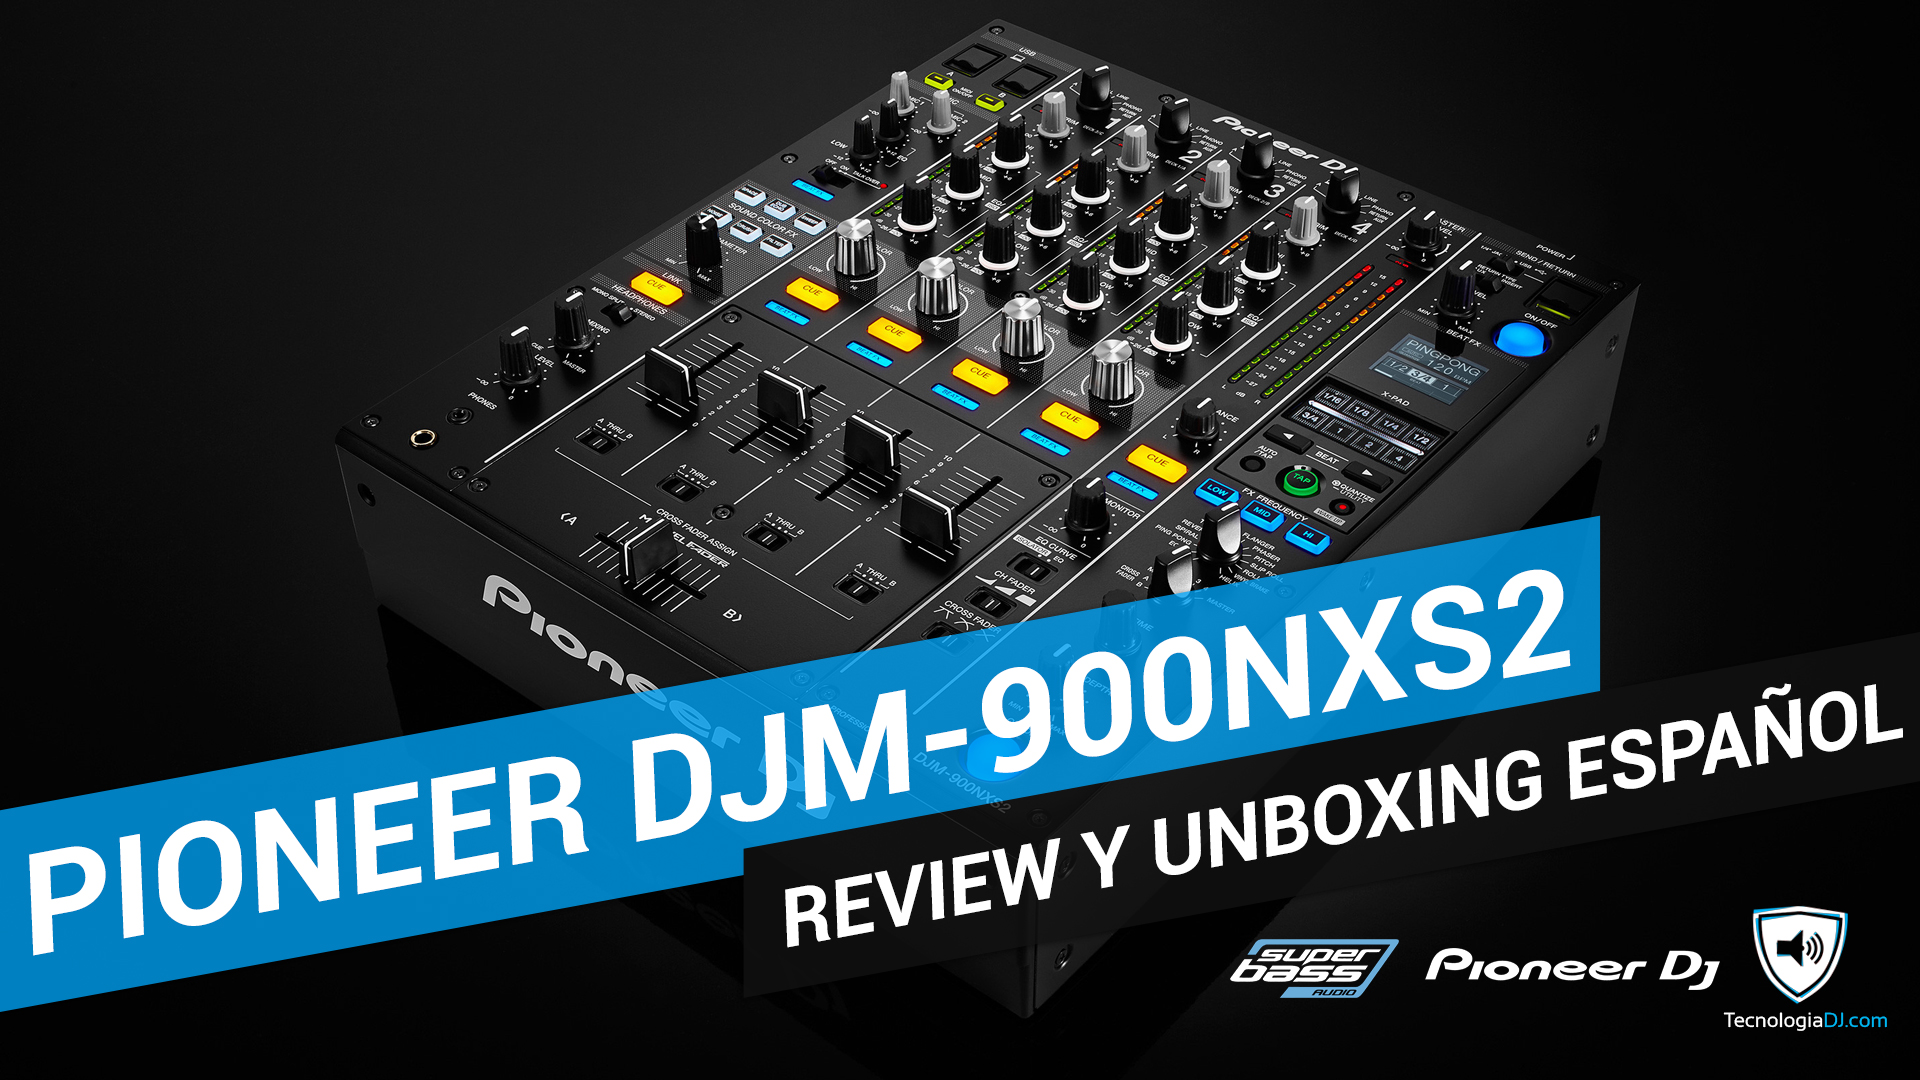 Review y unboxing en español mixer Pioneer DJM-900NXS2